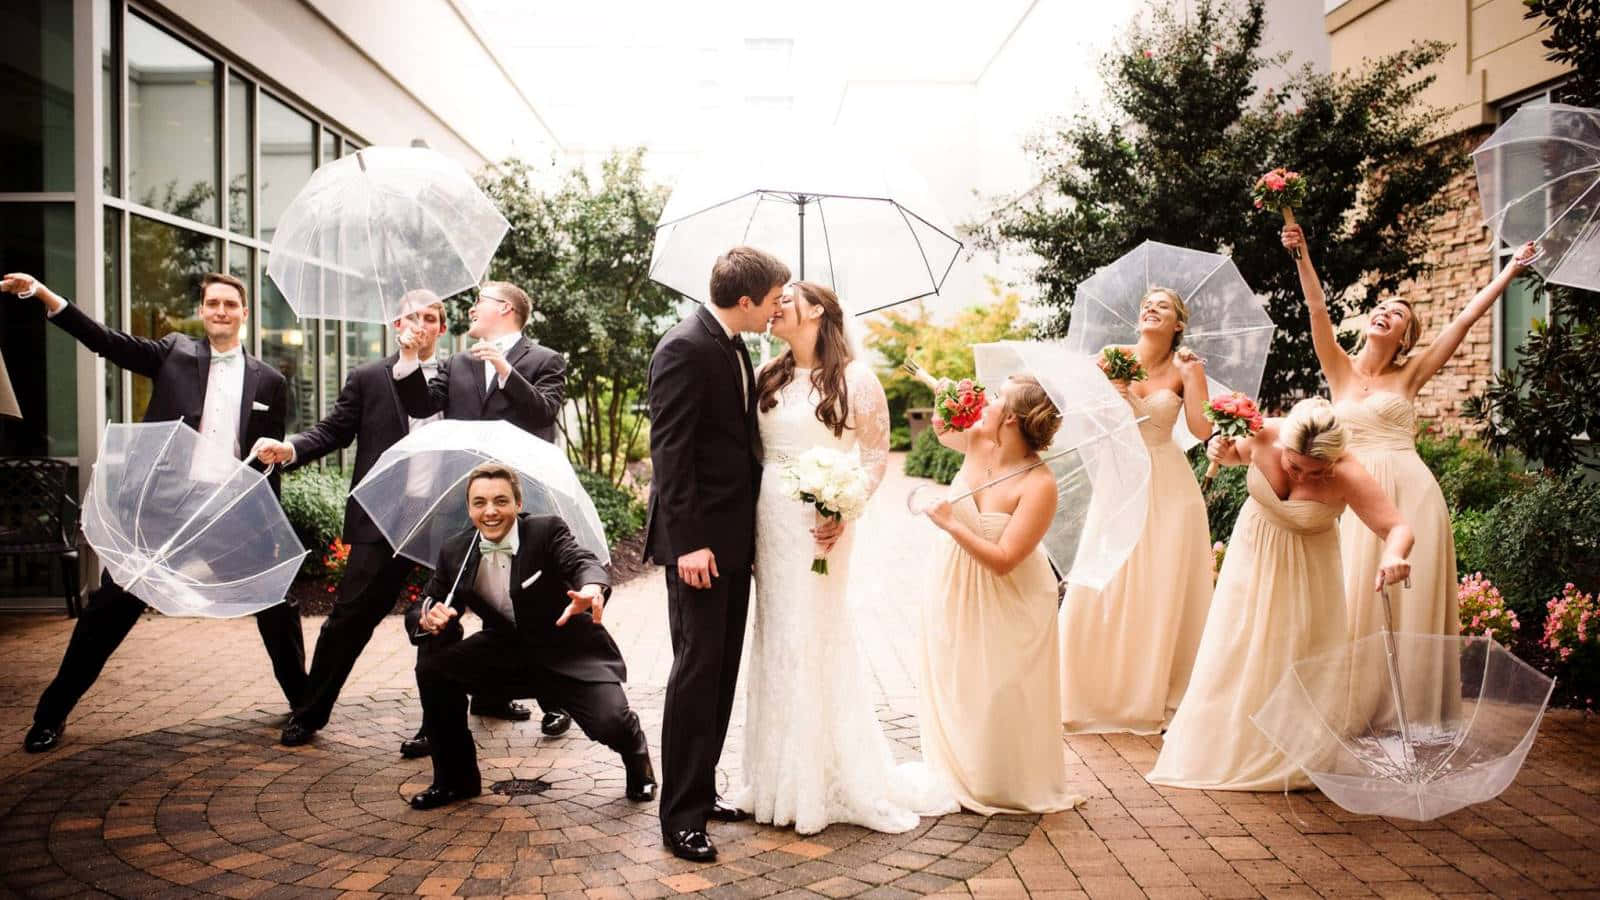 Wedding Party Rainy Picture